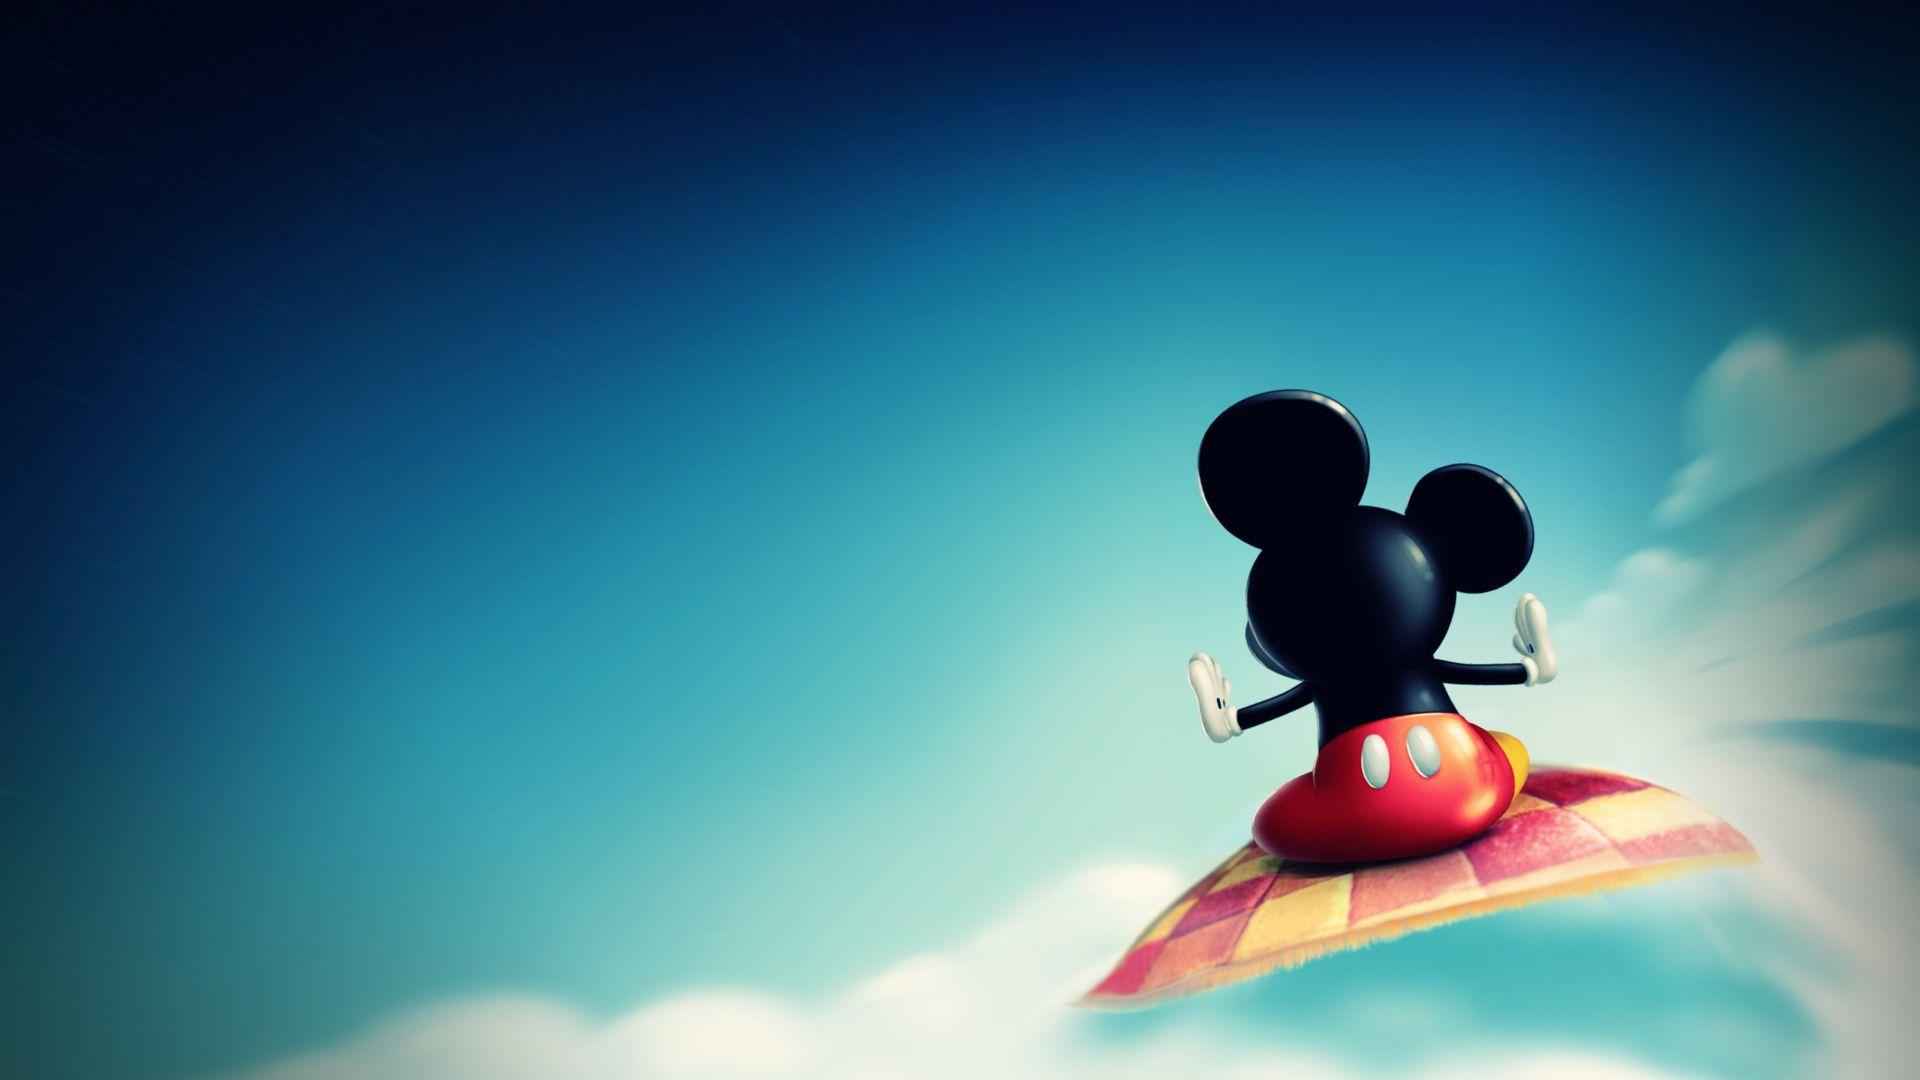 Mickey Mouse HD wallpaper. HD Wallpaper. Mickey mouse wallpaper, Mickey mouse background, Mickey mouse wallpaper iphone